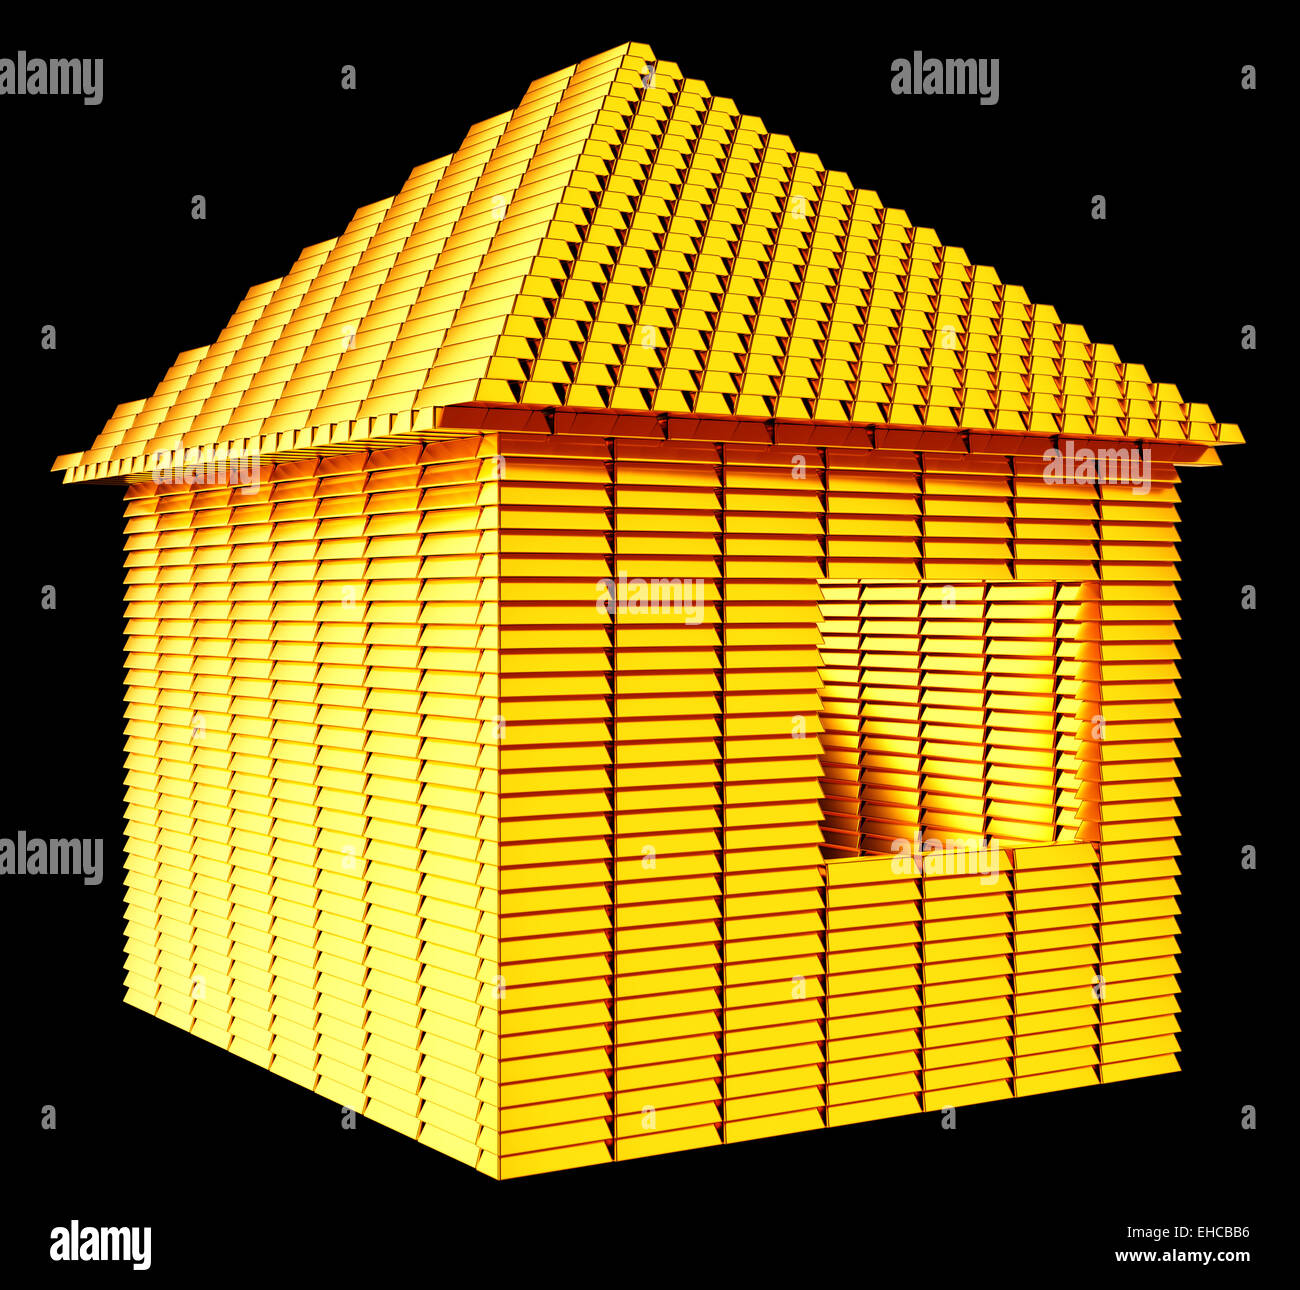 Valuable real estate: gold bars house shape over black Stock Photo